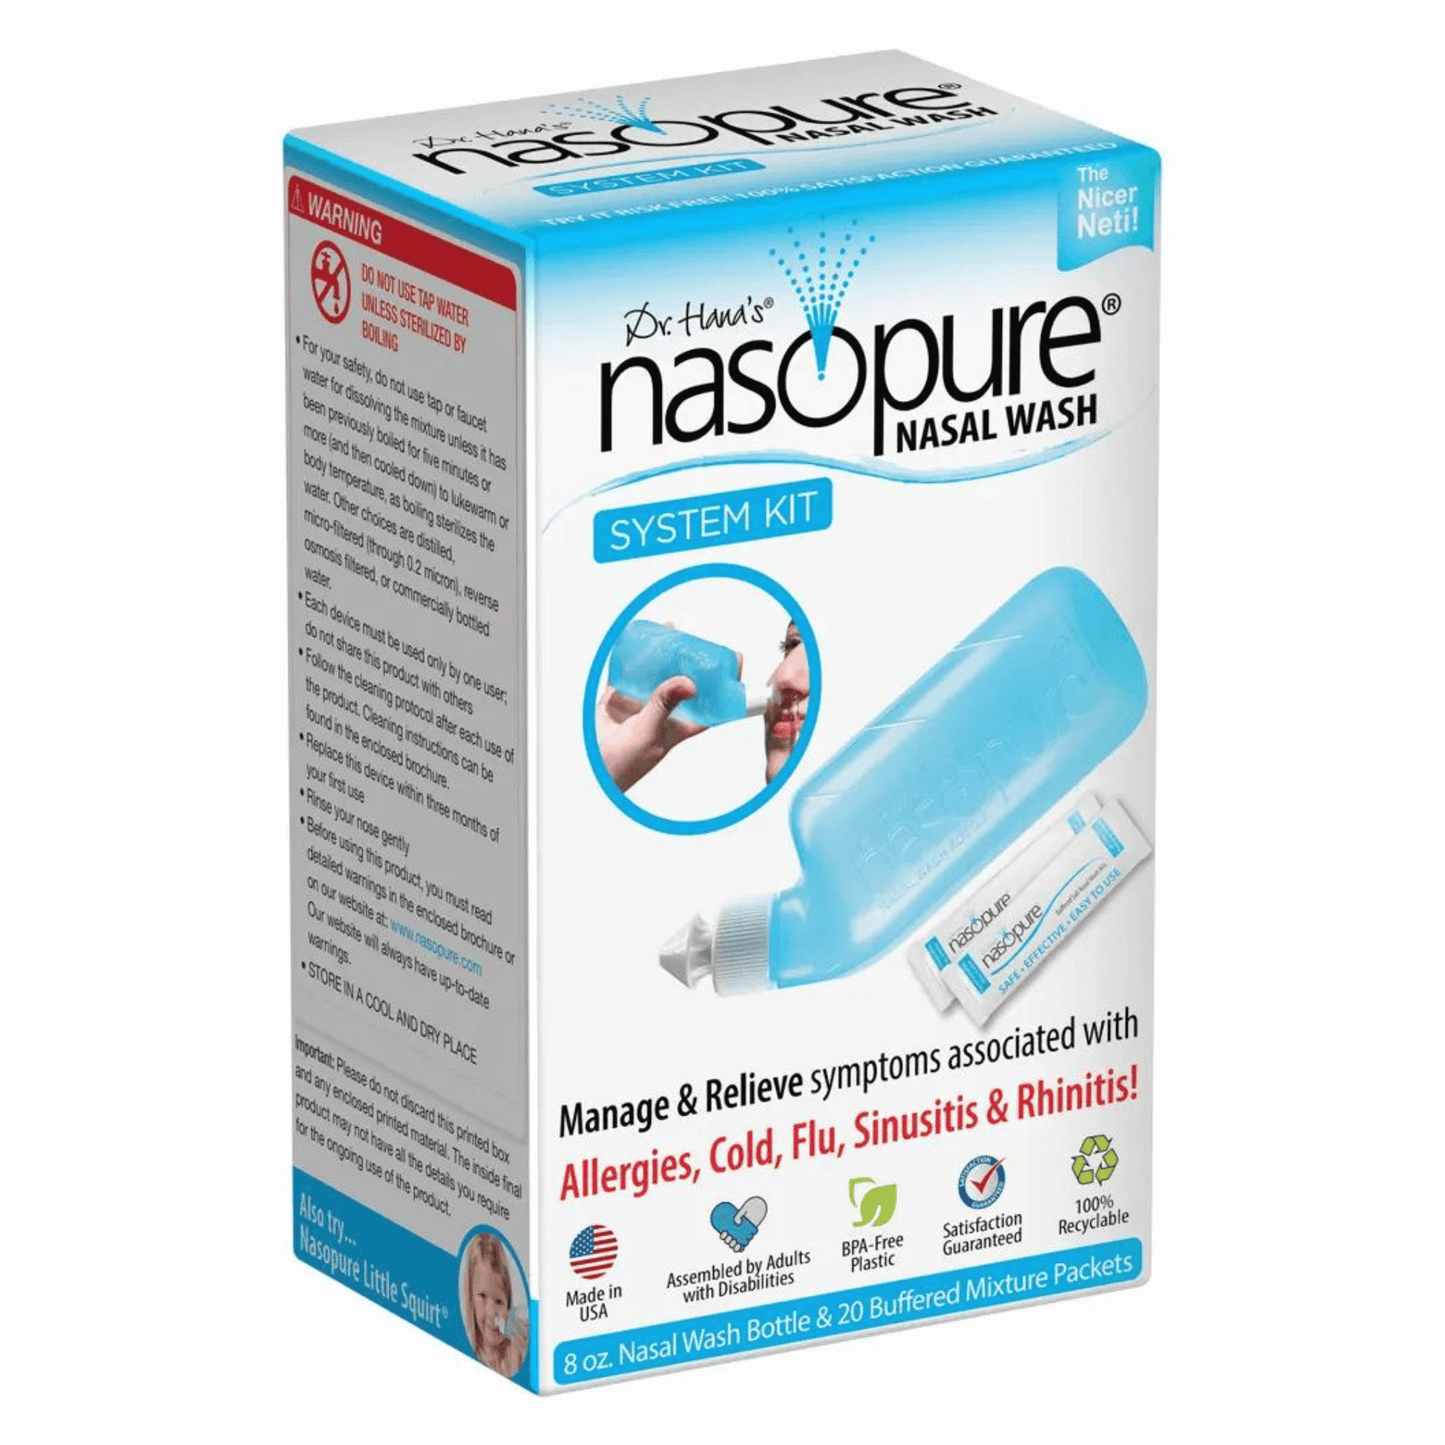 Nasopure System Kit (8 oz bottle) #31537